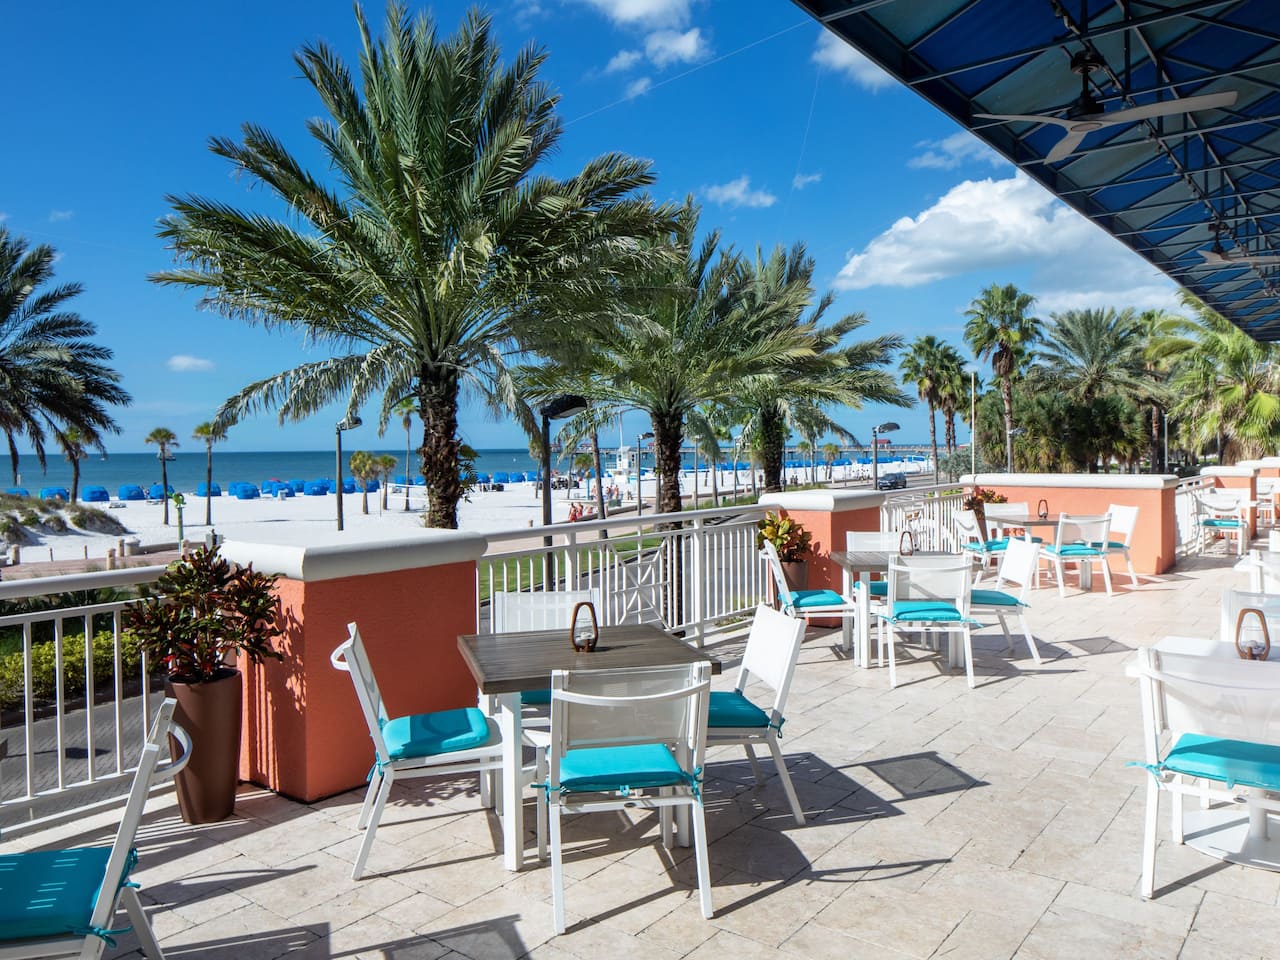 Ocean front dining at Hyatt Regency Clearwater Beach Resort